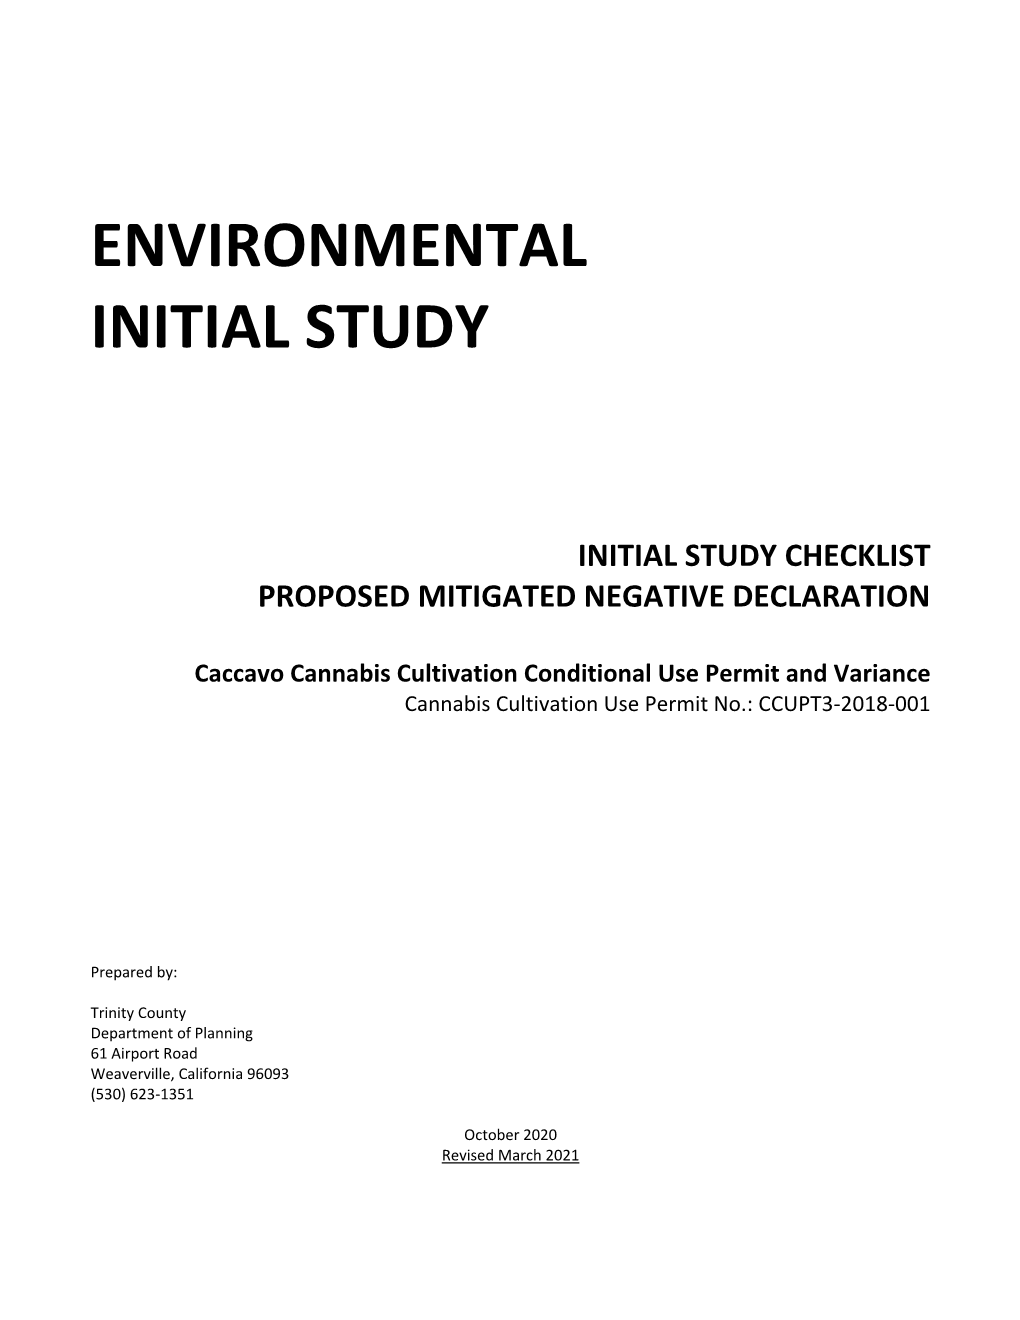 Environmental Initial Study